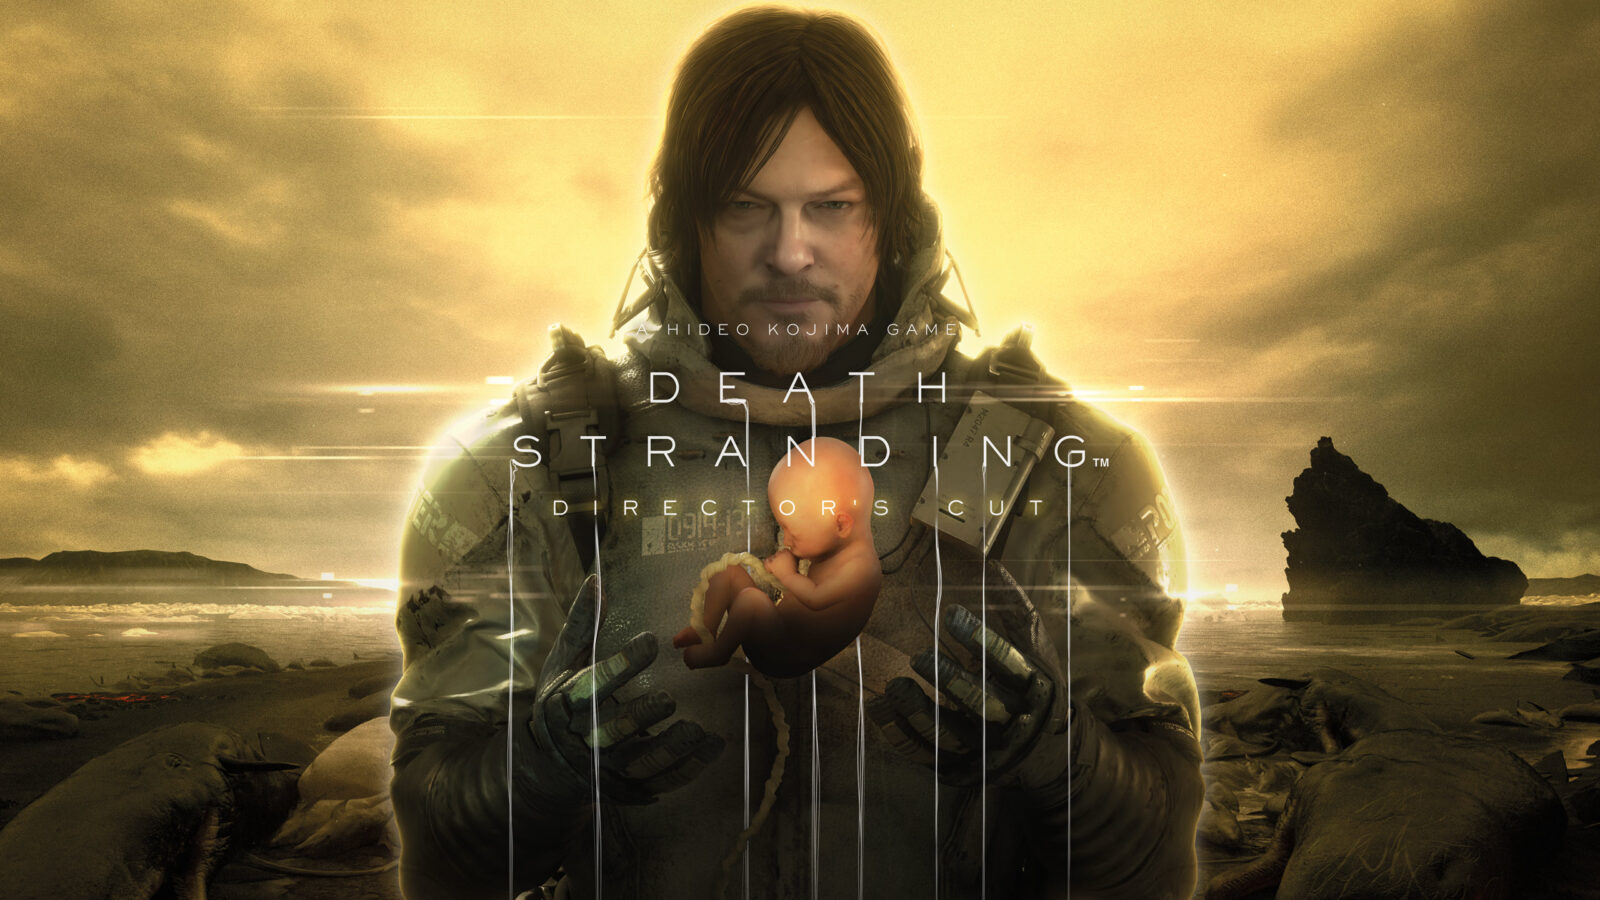 death stranding header | Death Stranding | Epic Games แจกเกม Death Stranding ผิดเวอร์ชั่นเพราะเด็กฝึกงาน !!